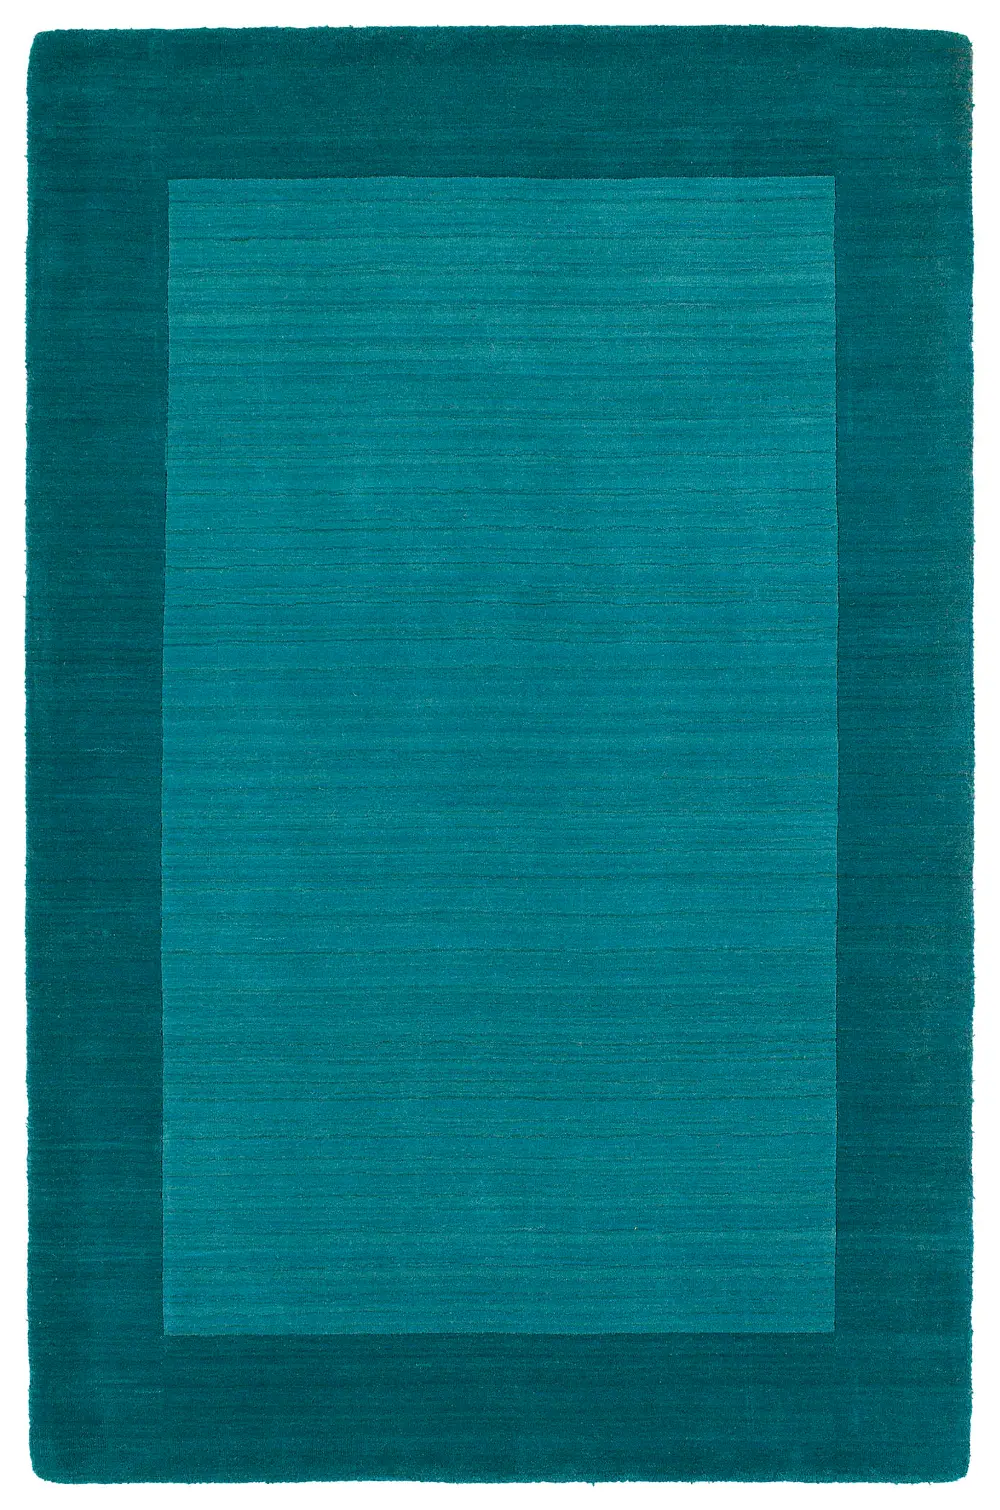 5 x 8 Medium Wool Turquoise Area Rug - Regency-1